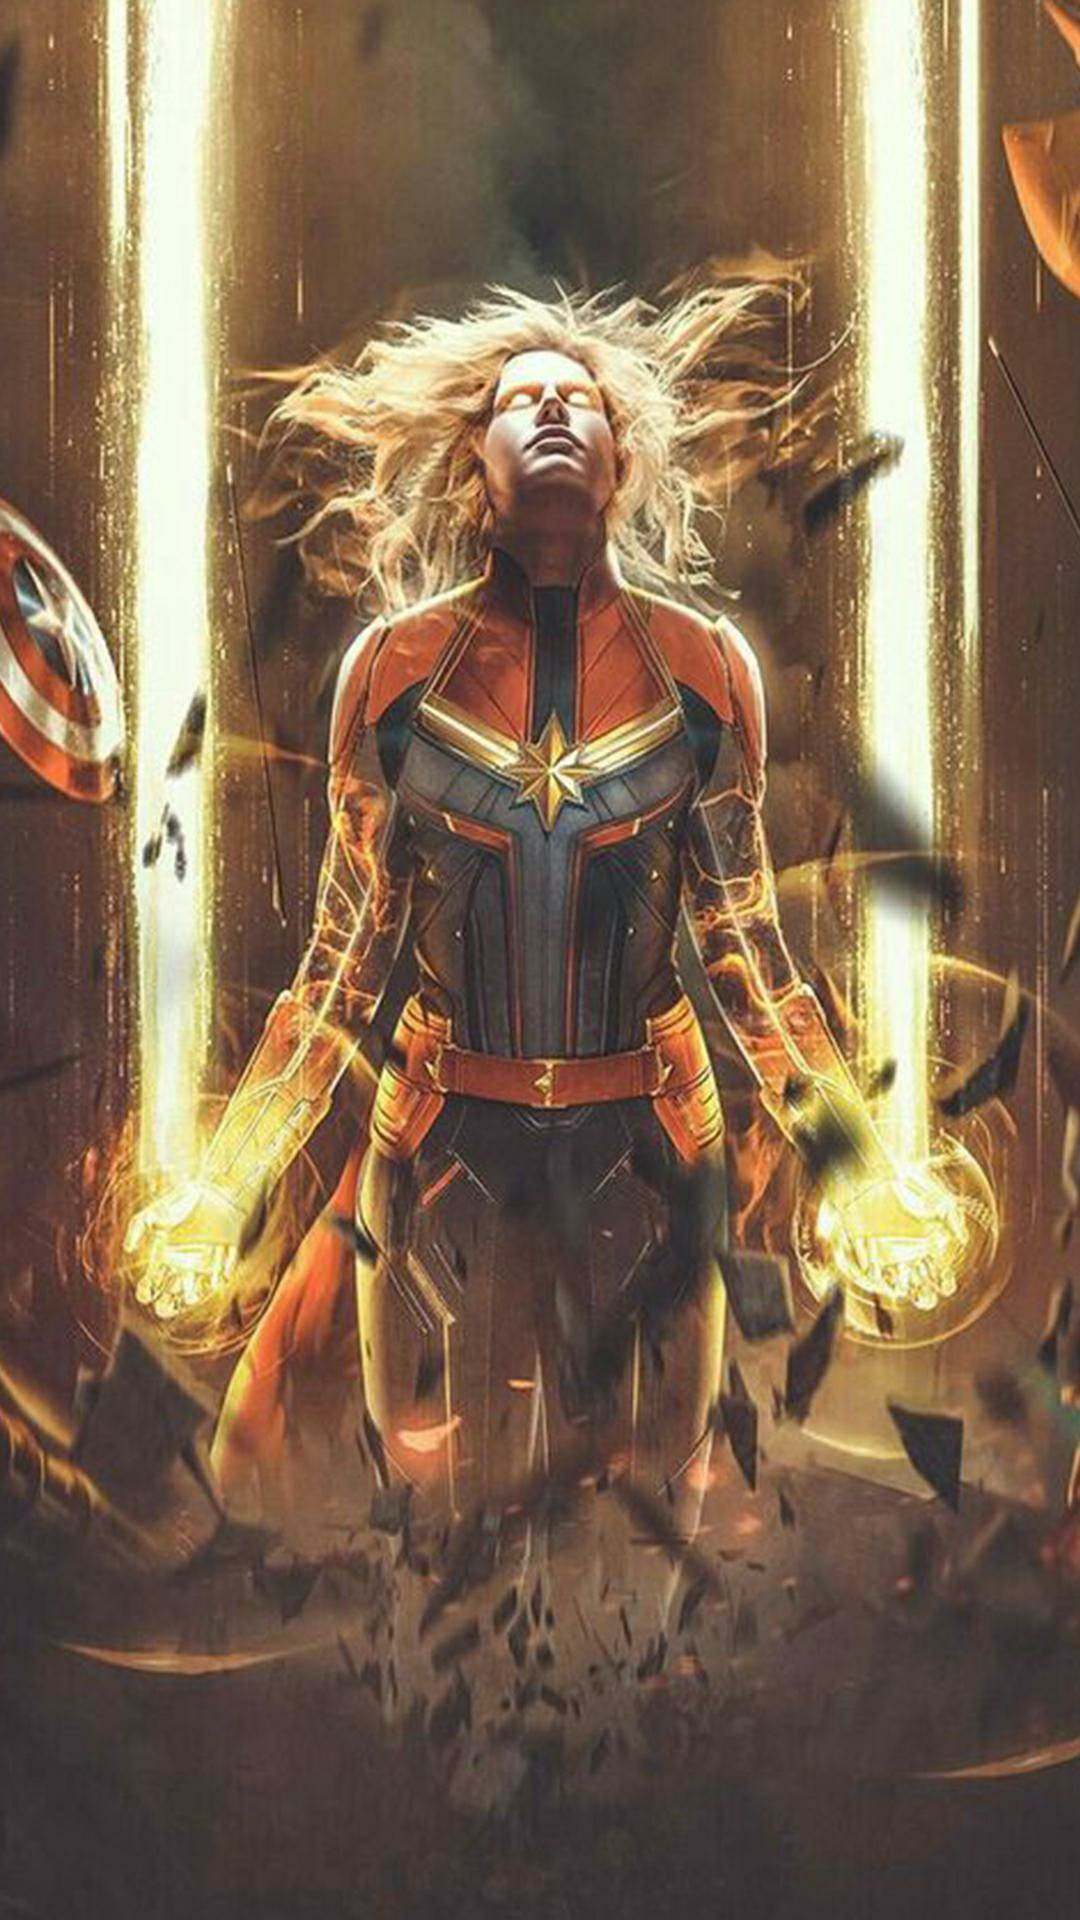  Captain Marvel Hintergrundbild 1080x1920. Captain Marvel Most Powerful Avenger IPhone Wallpaper Wallpaper : iPhone Wallpaper